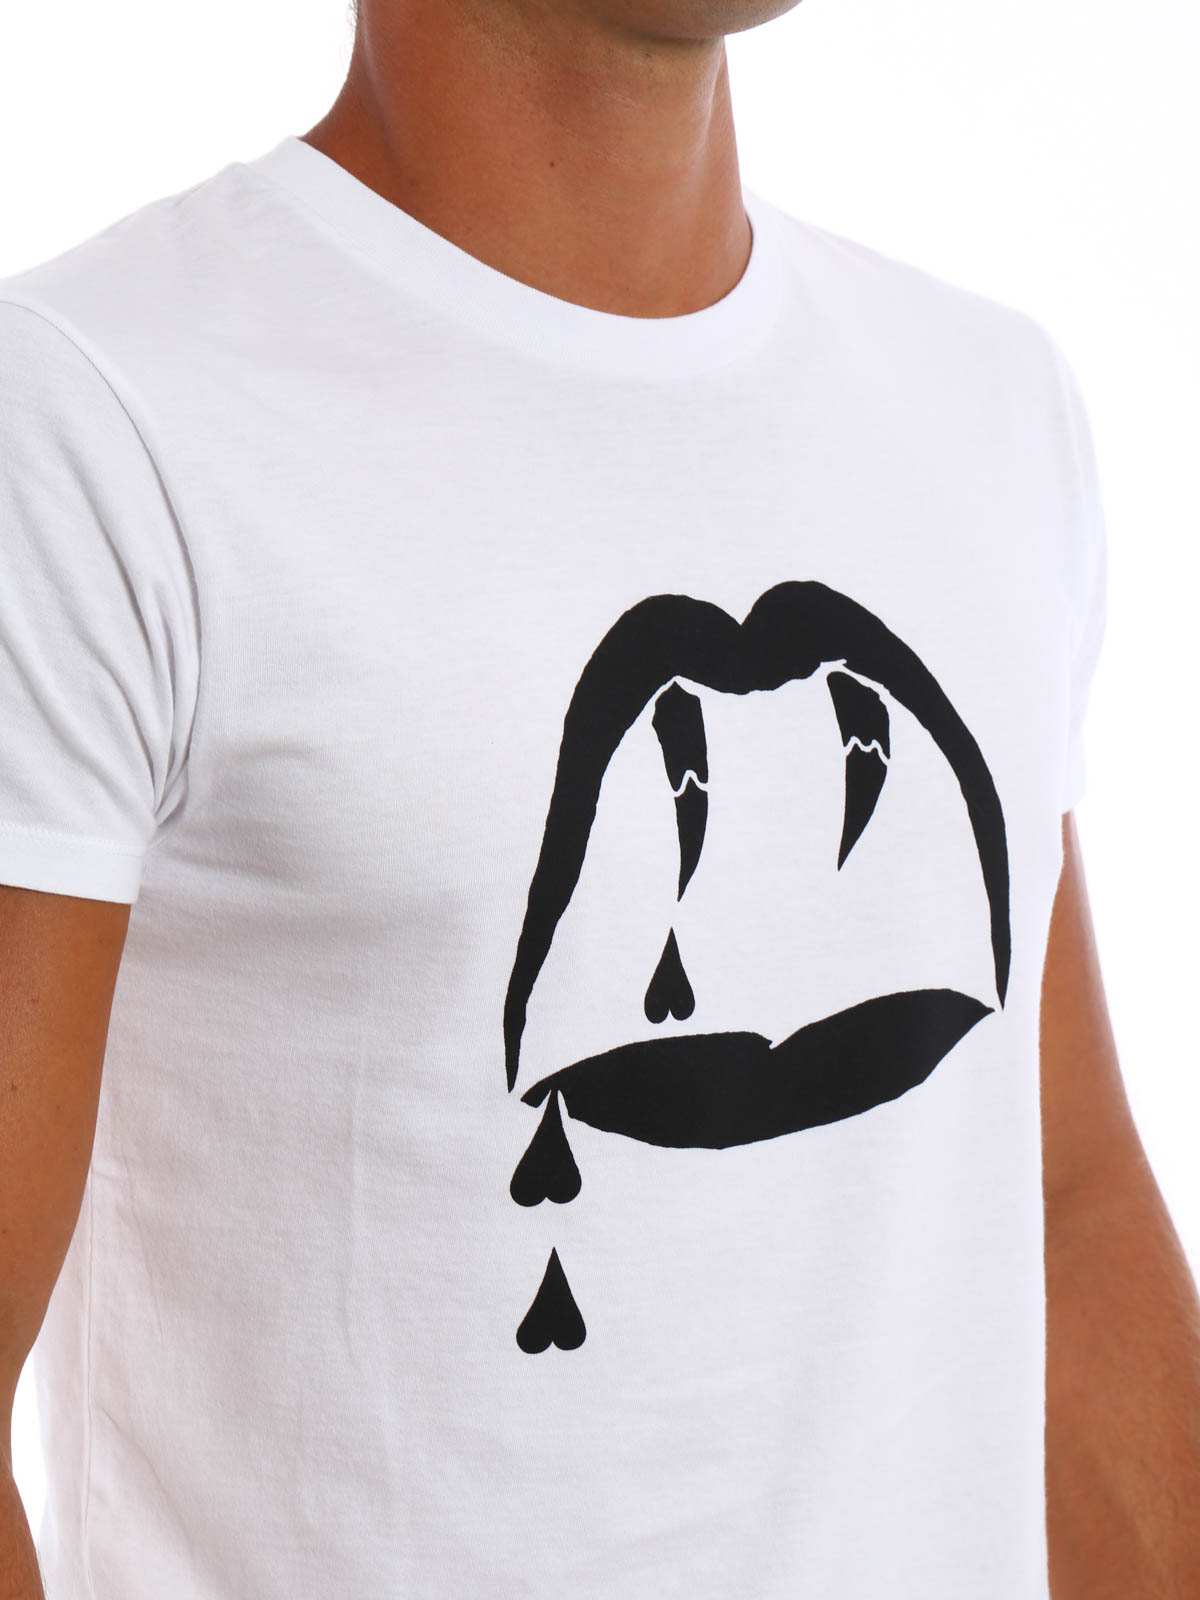 T-shirts Saint Laurent - Blood print T-shirt - 378983Y2LS19000